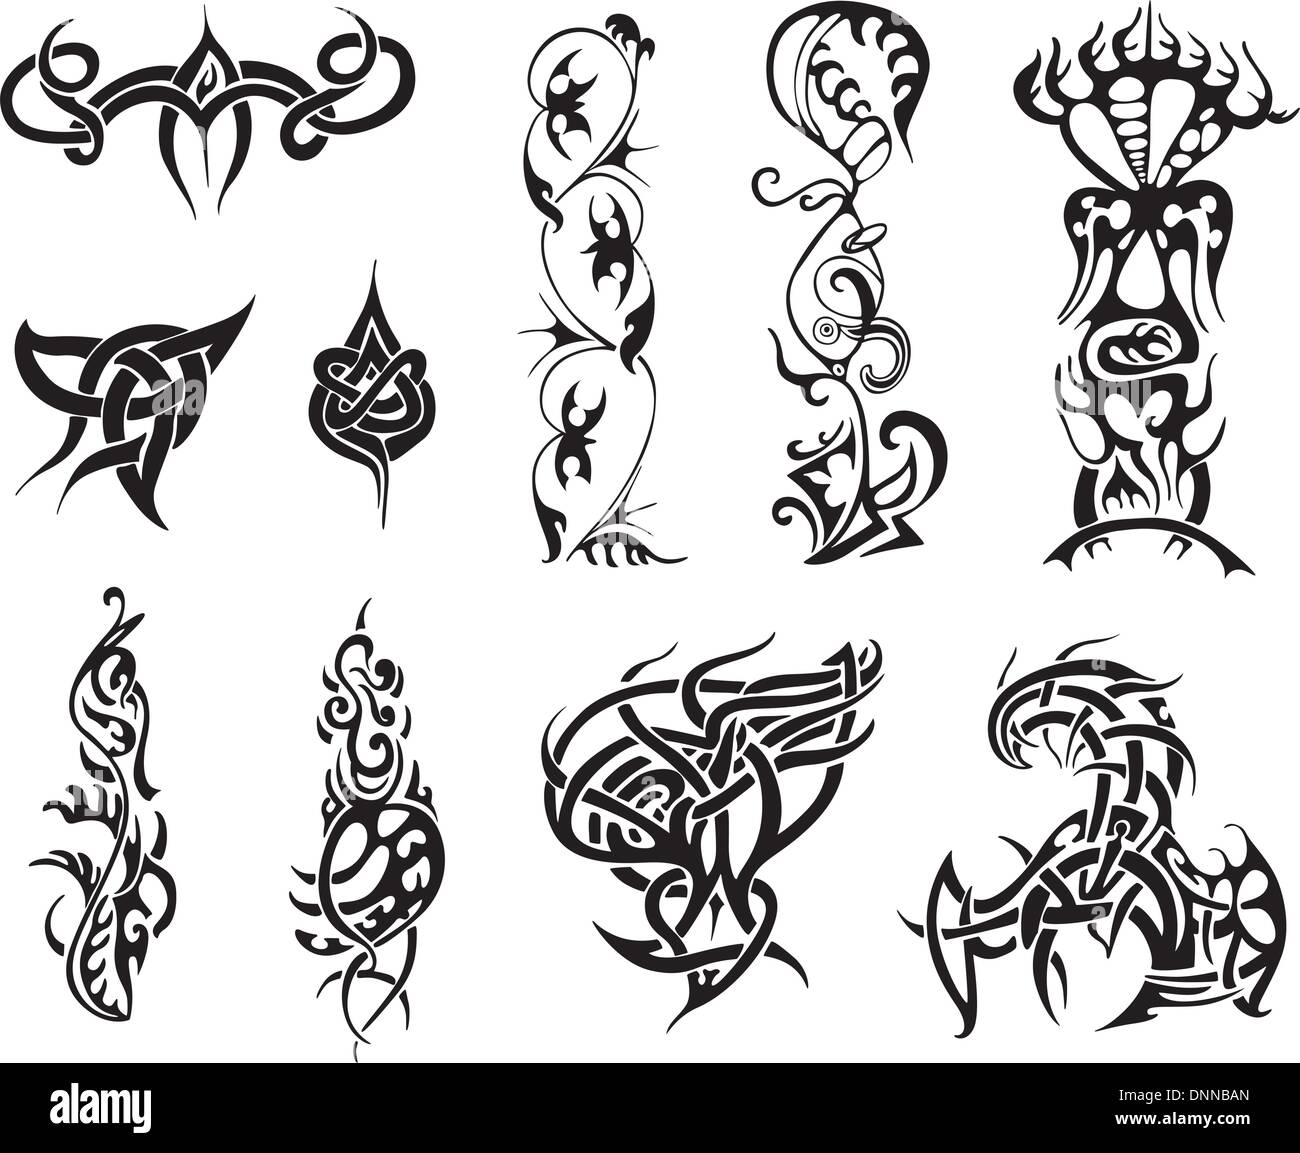 Tribal tattoo designs. Set of vector illustrations. Stock Vector